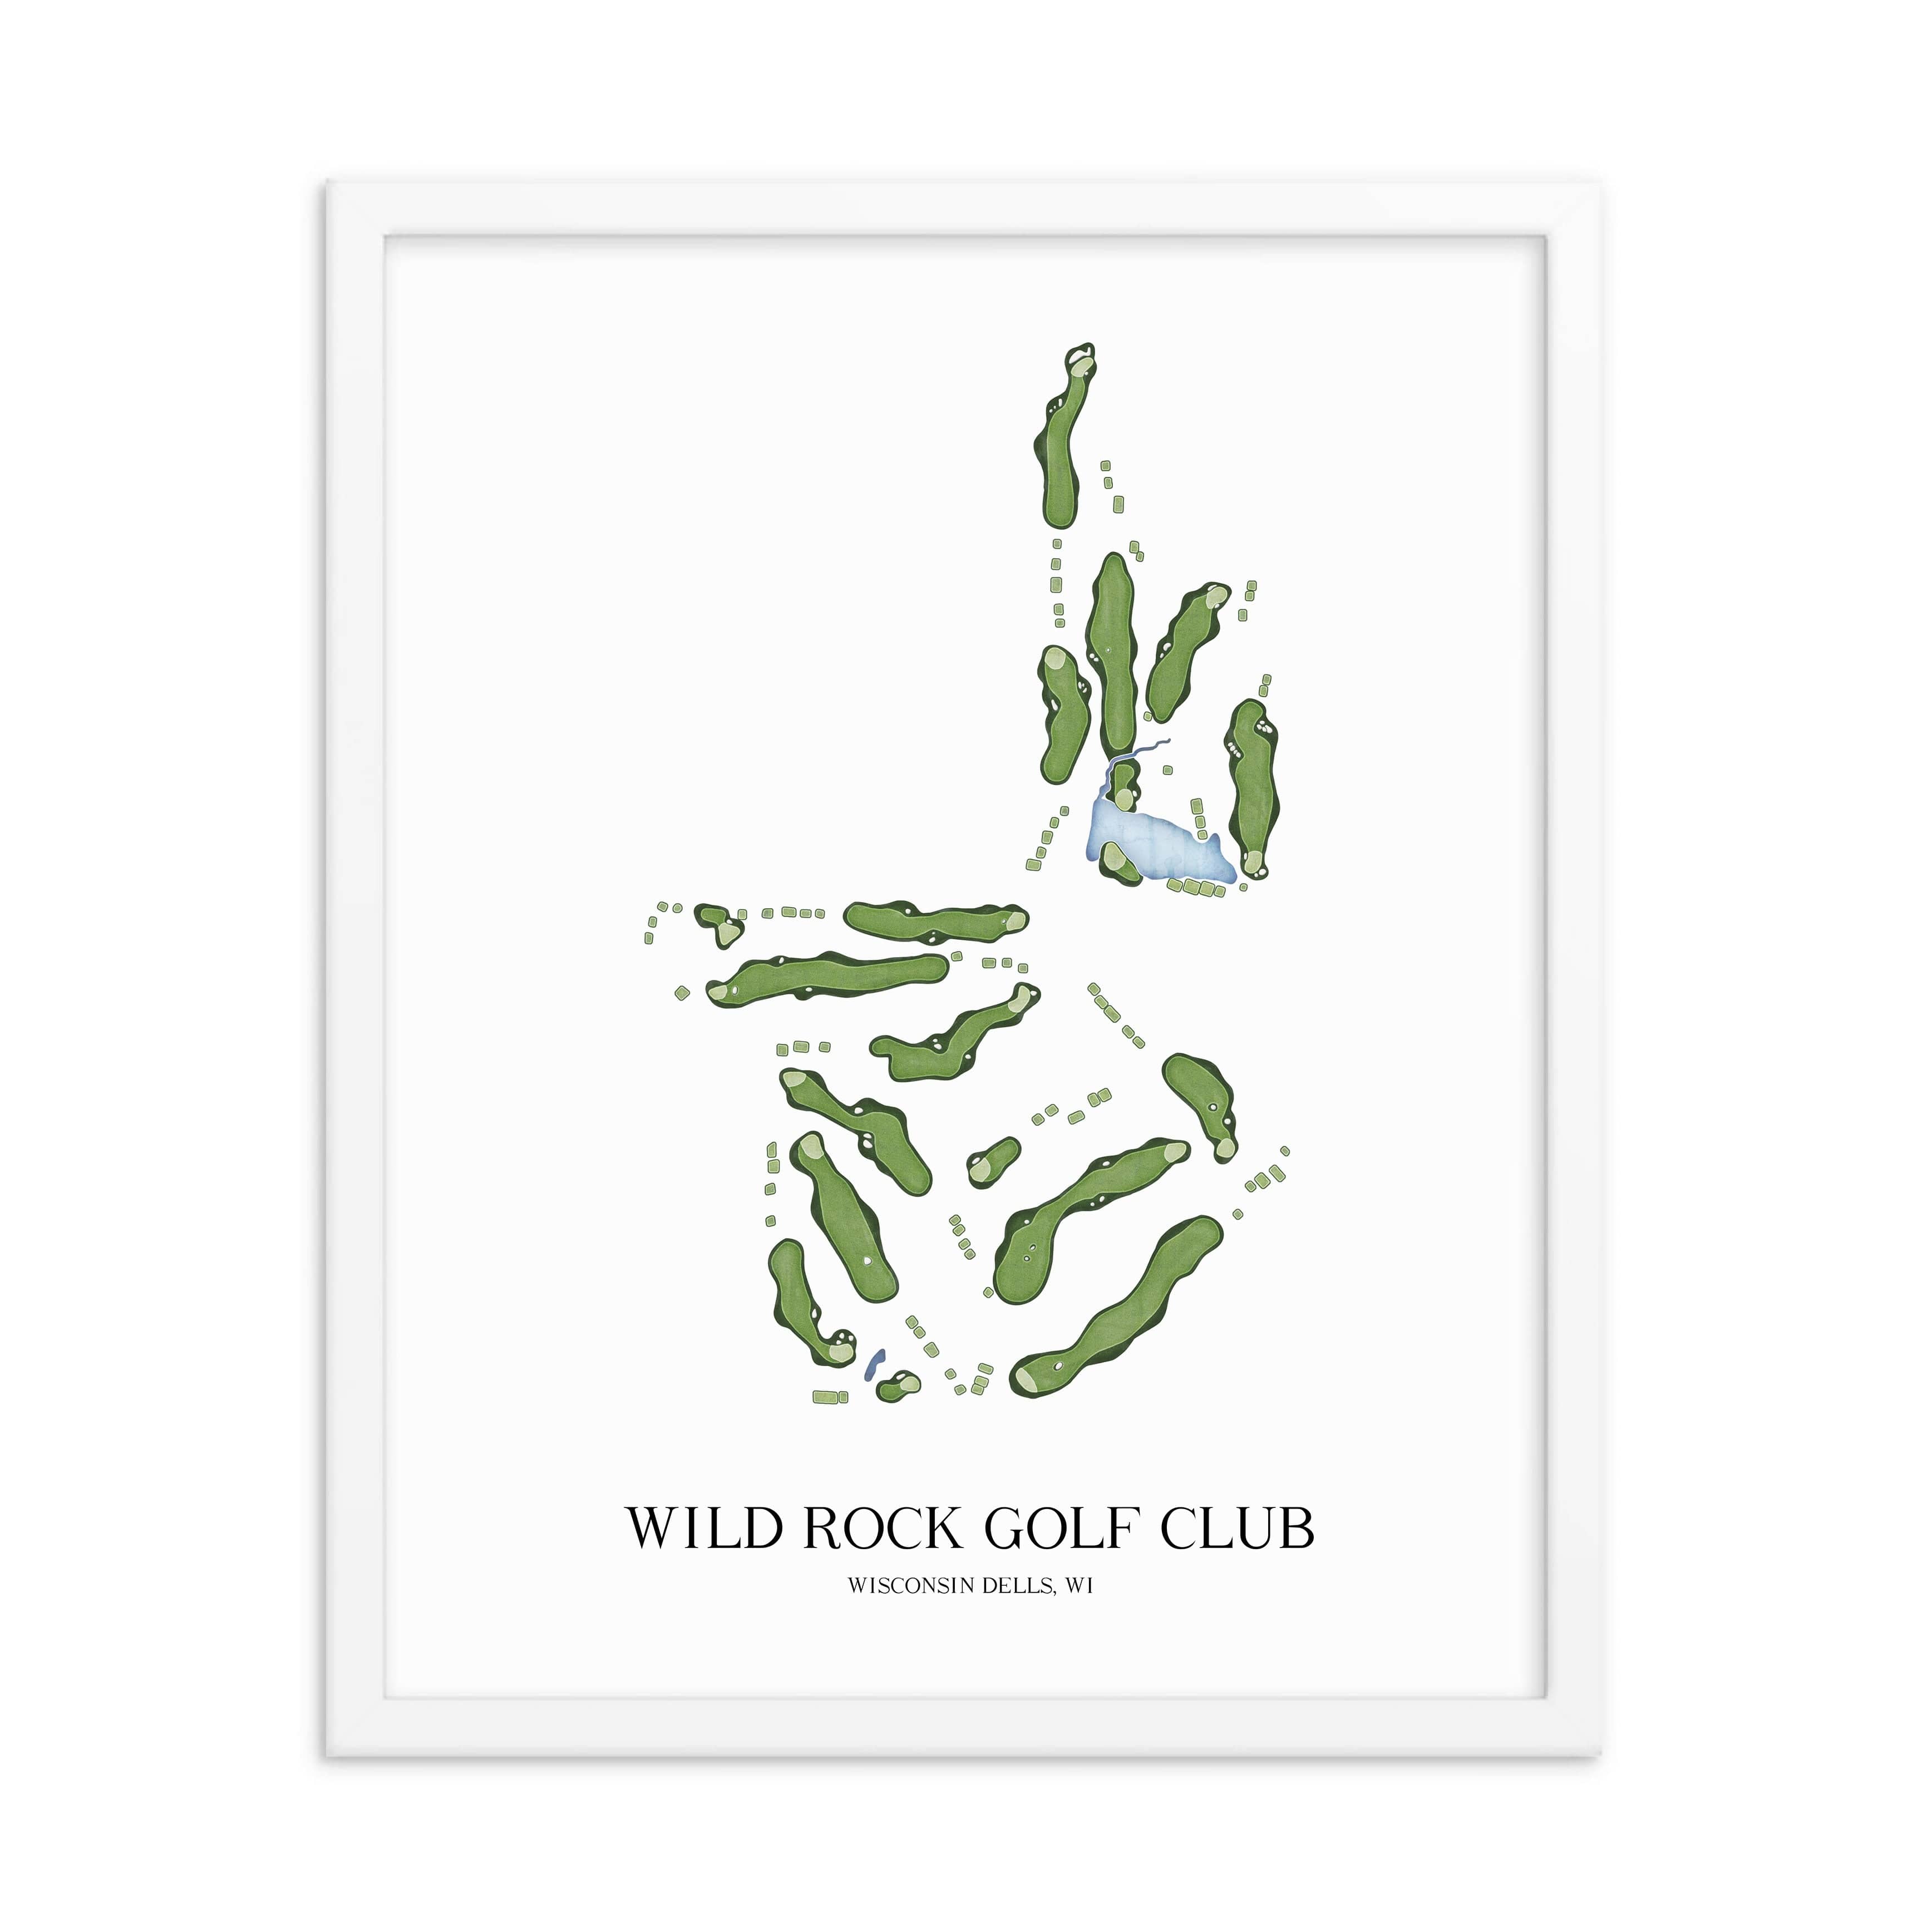 The 19th Hole Golf Shop - Golf Course Prints -  Wild Rock Golf Club Golf Course Map